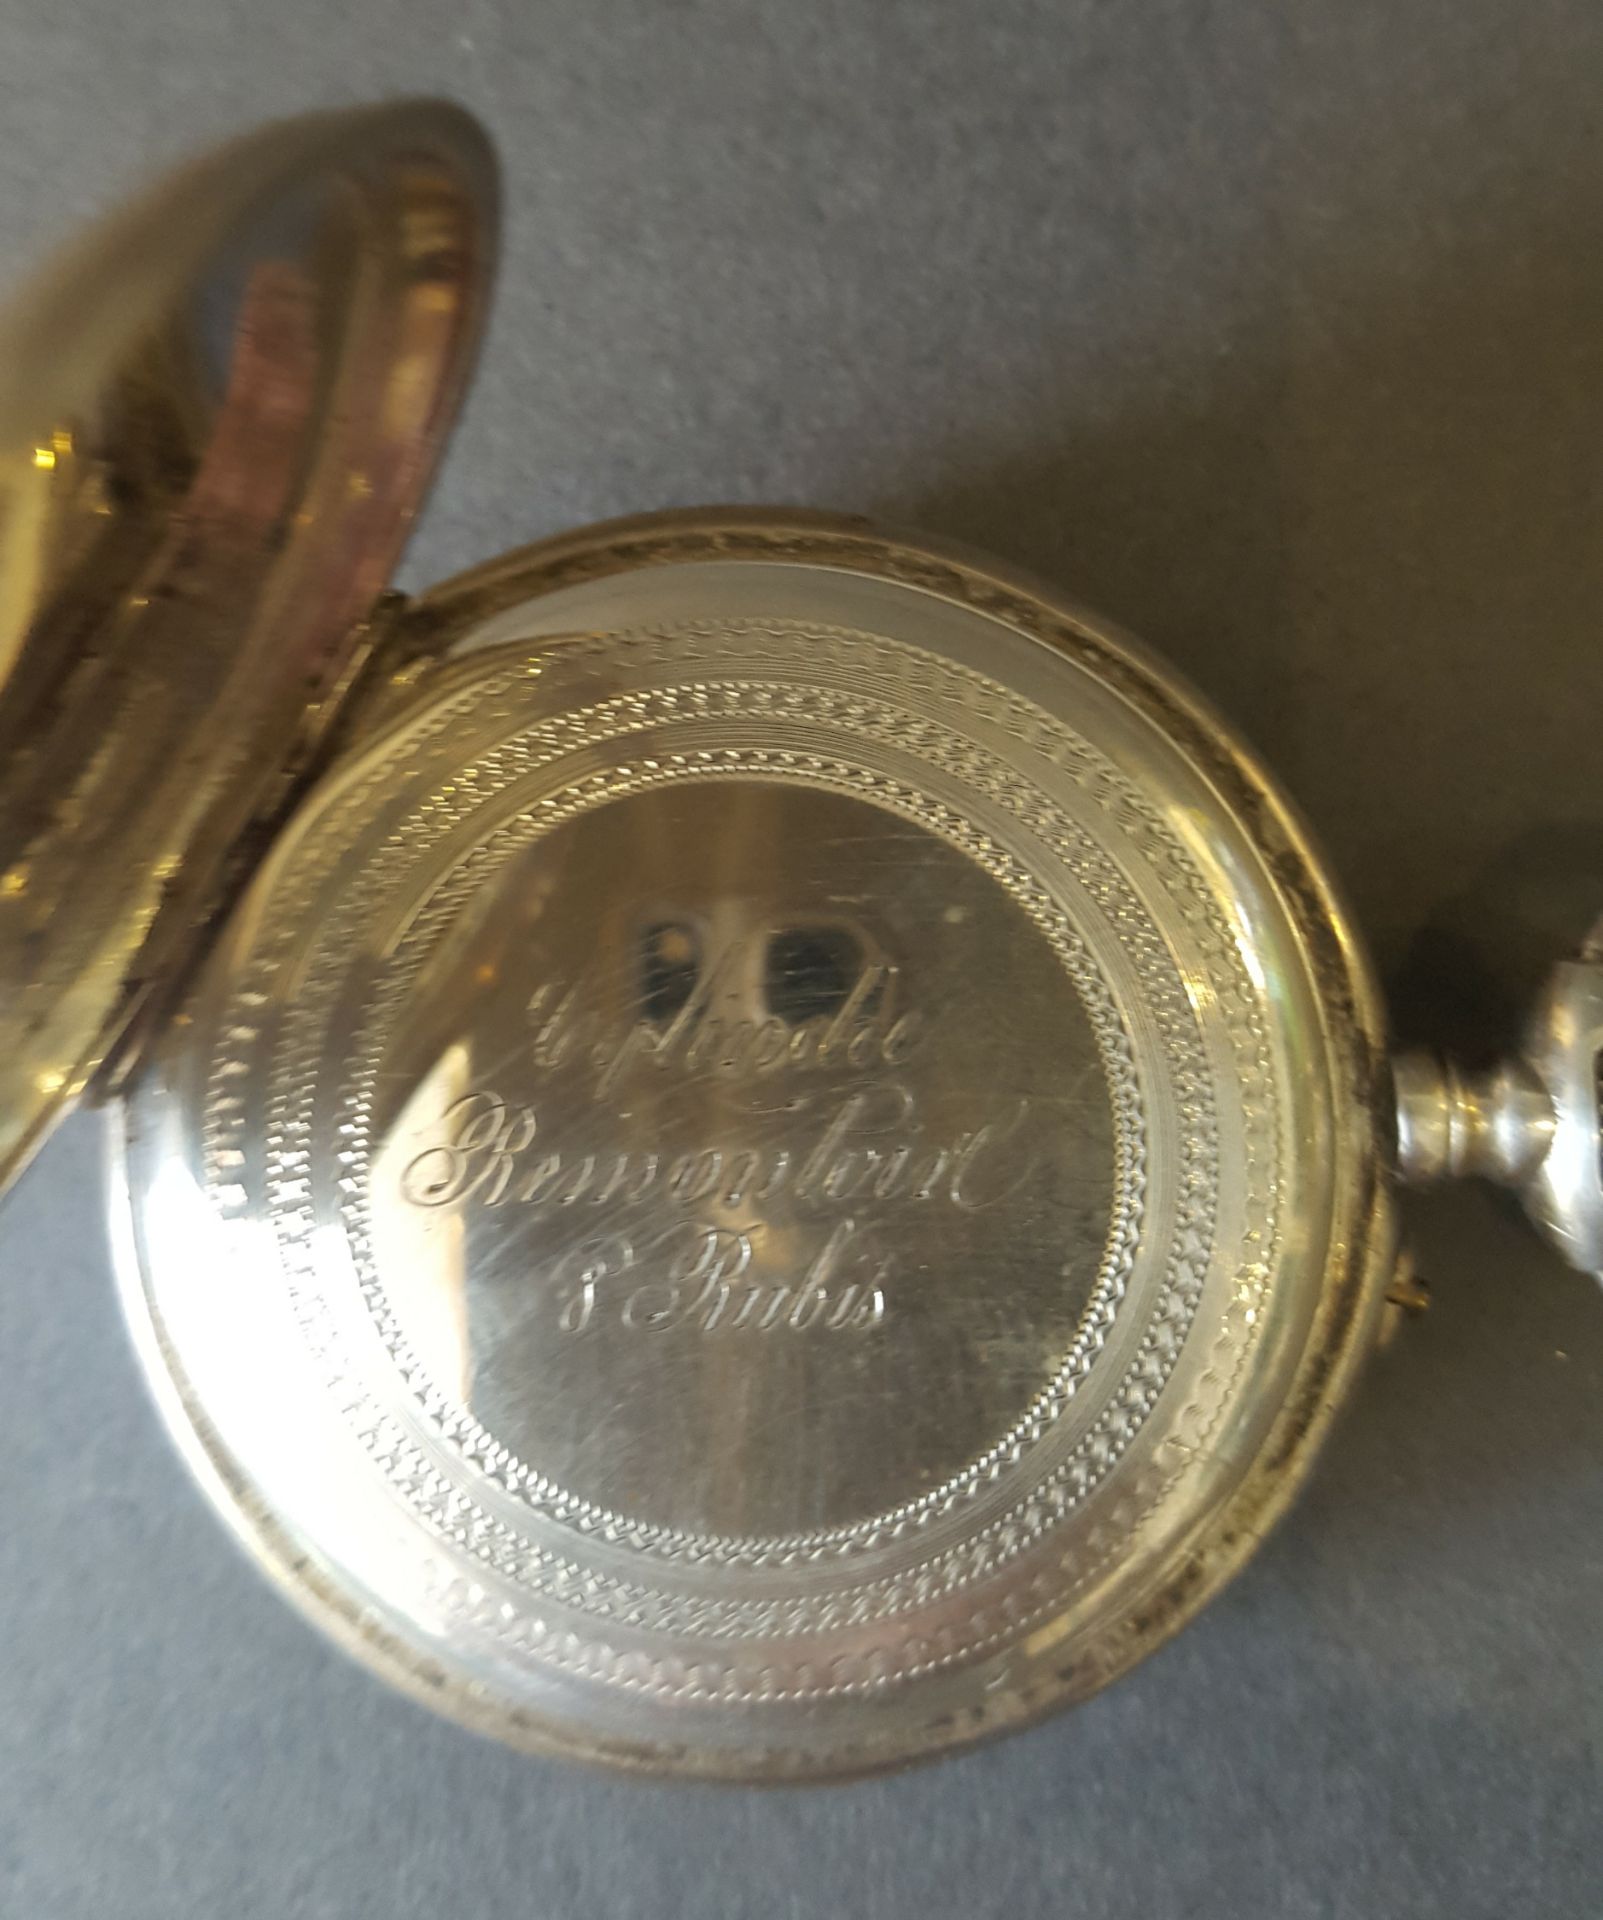 Antique Vintage French Continetal Silver Remontoir & Rubis Pocket Watch Hallmarked 800 - Image 3 of 4